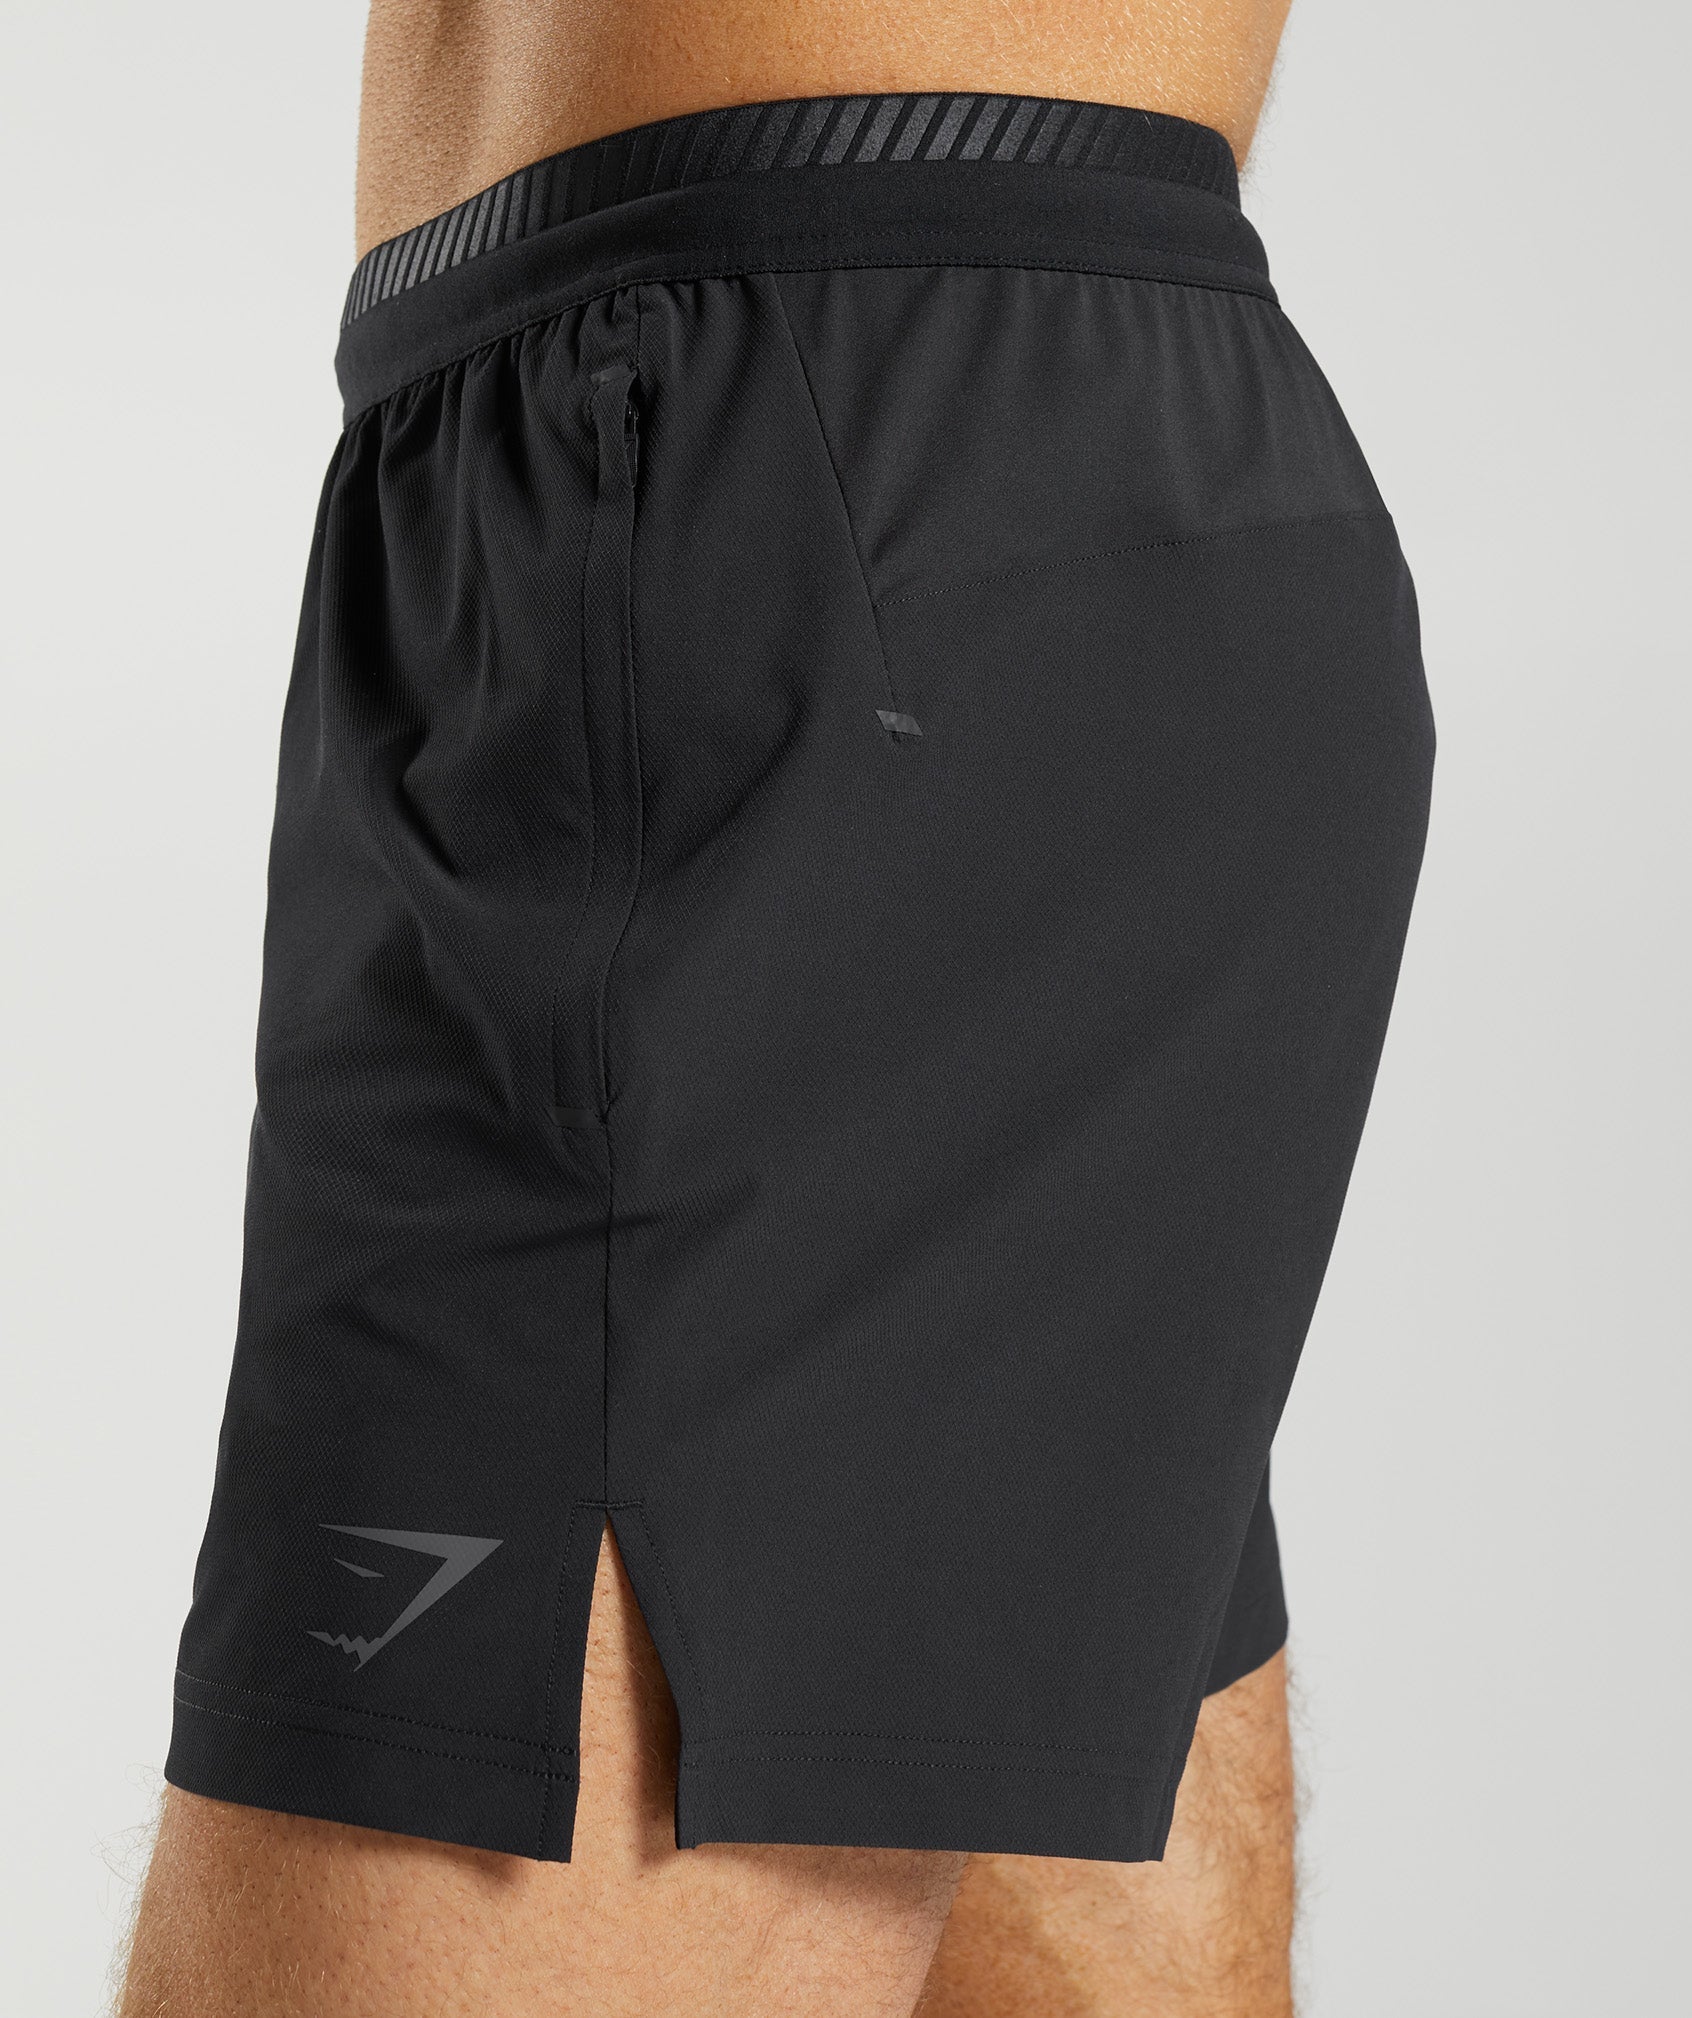 Apex 5" Hybrid Shorts in Black - view 5